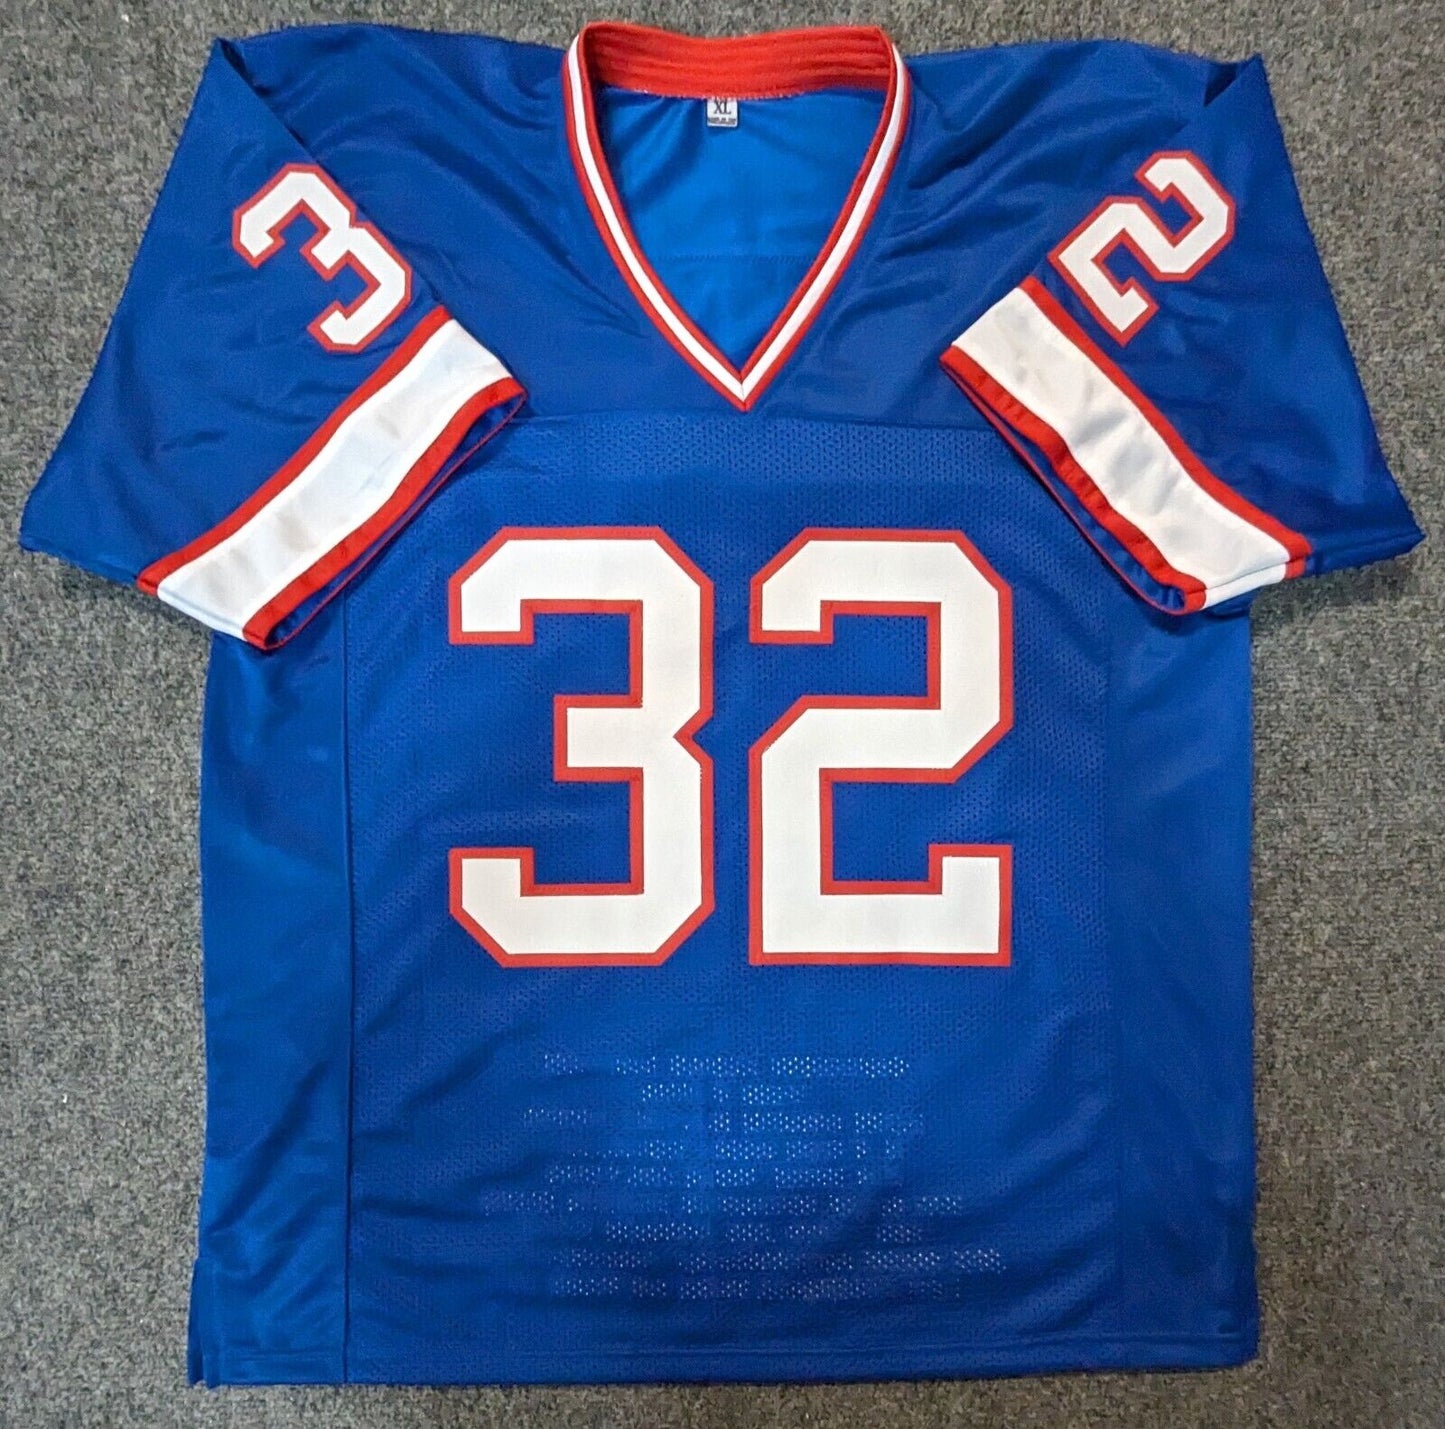 MVP Authentics Buffalo Bills Oj Simpson Autographed Signed Stat Jersey Jsa Coa 202.50 sports jersey framing , jersey framing